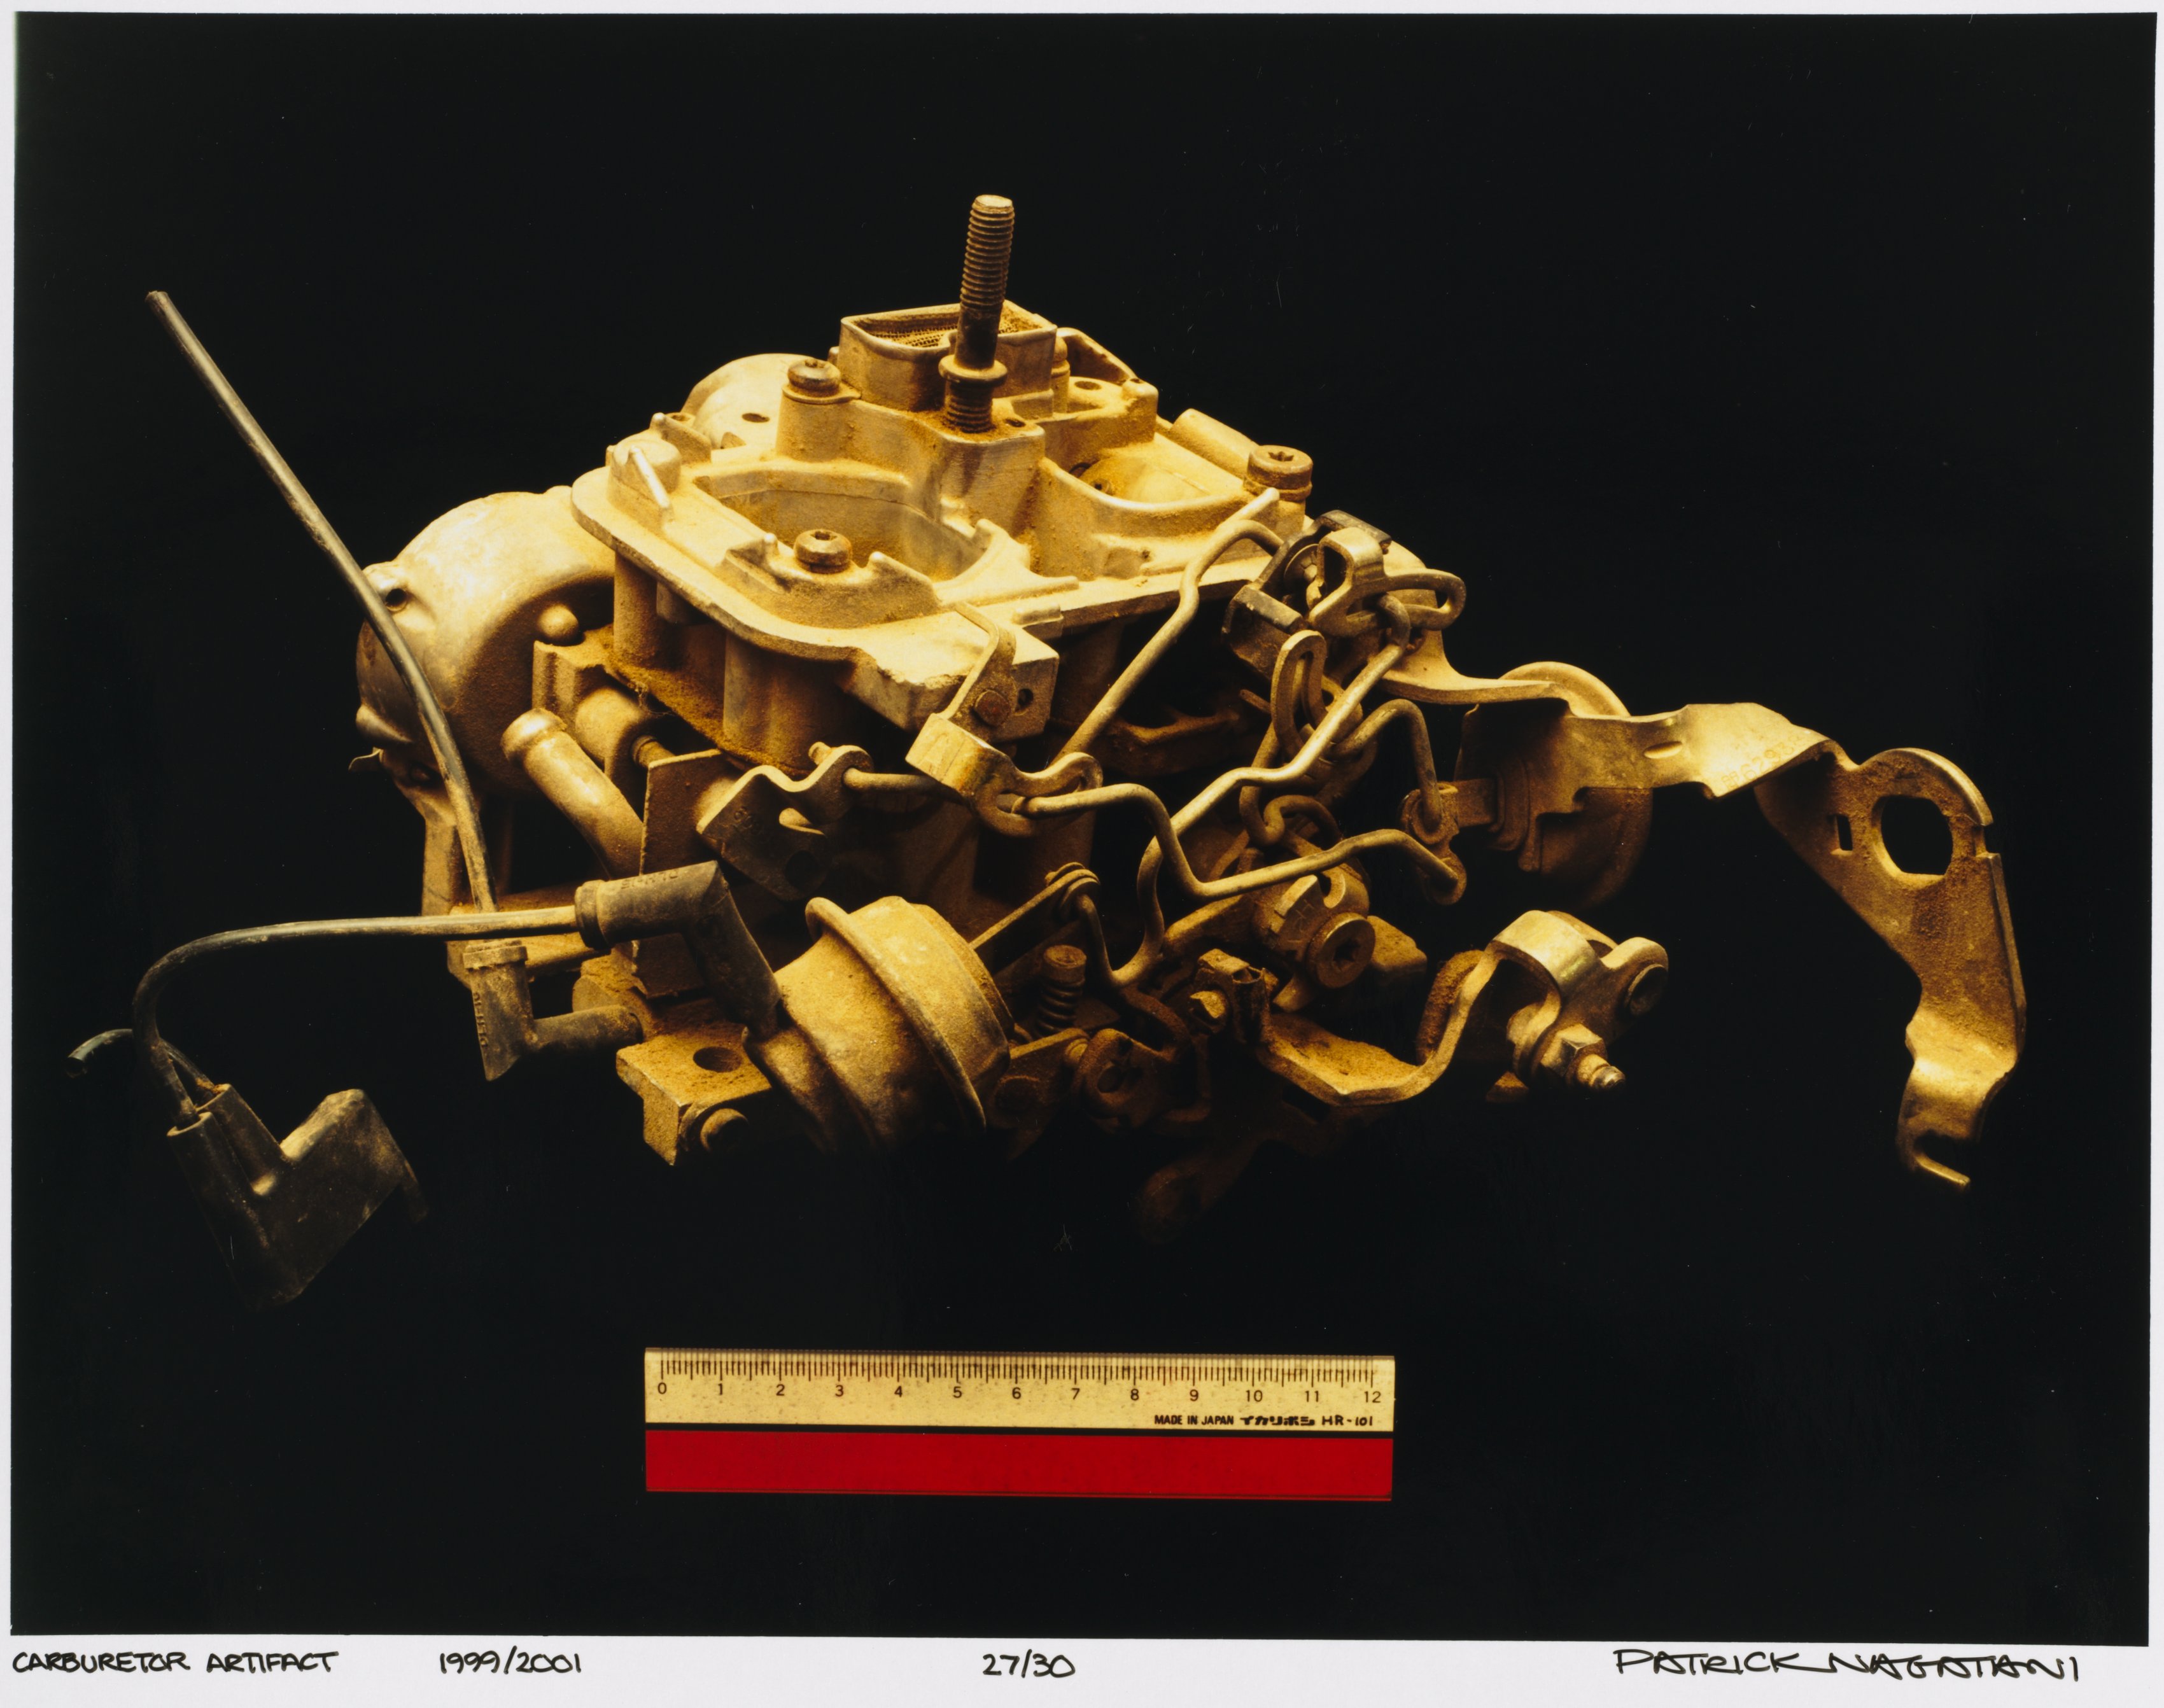 Carburetor Artifact 